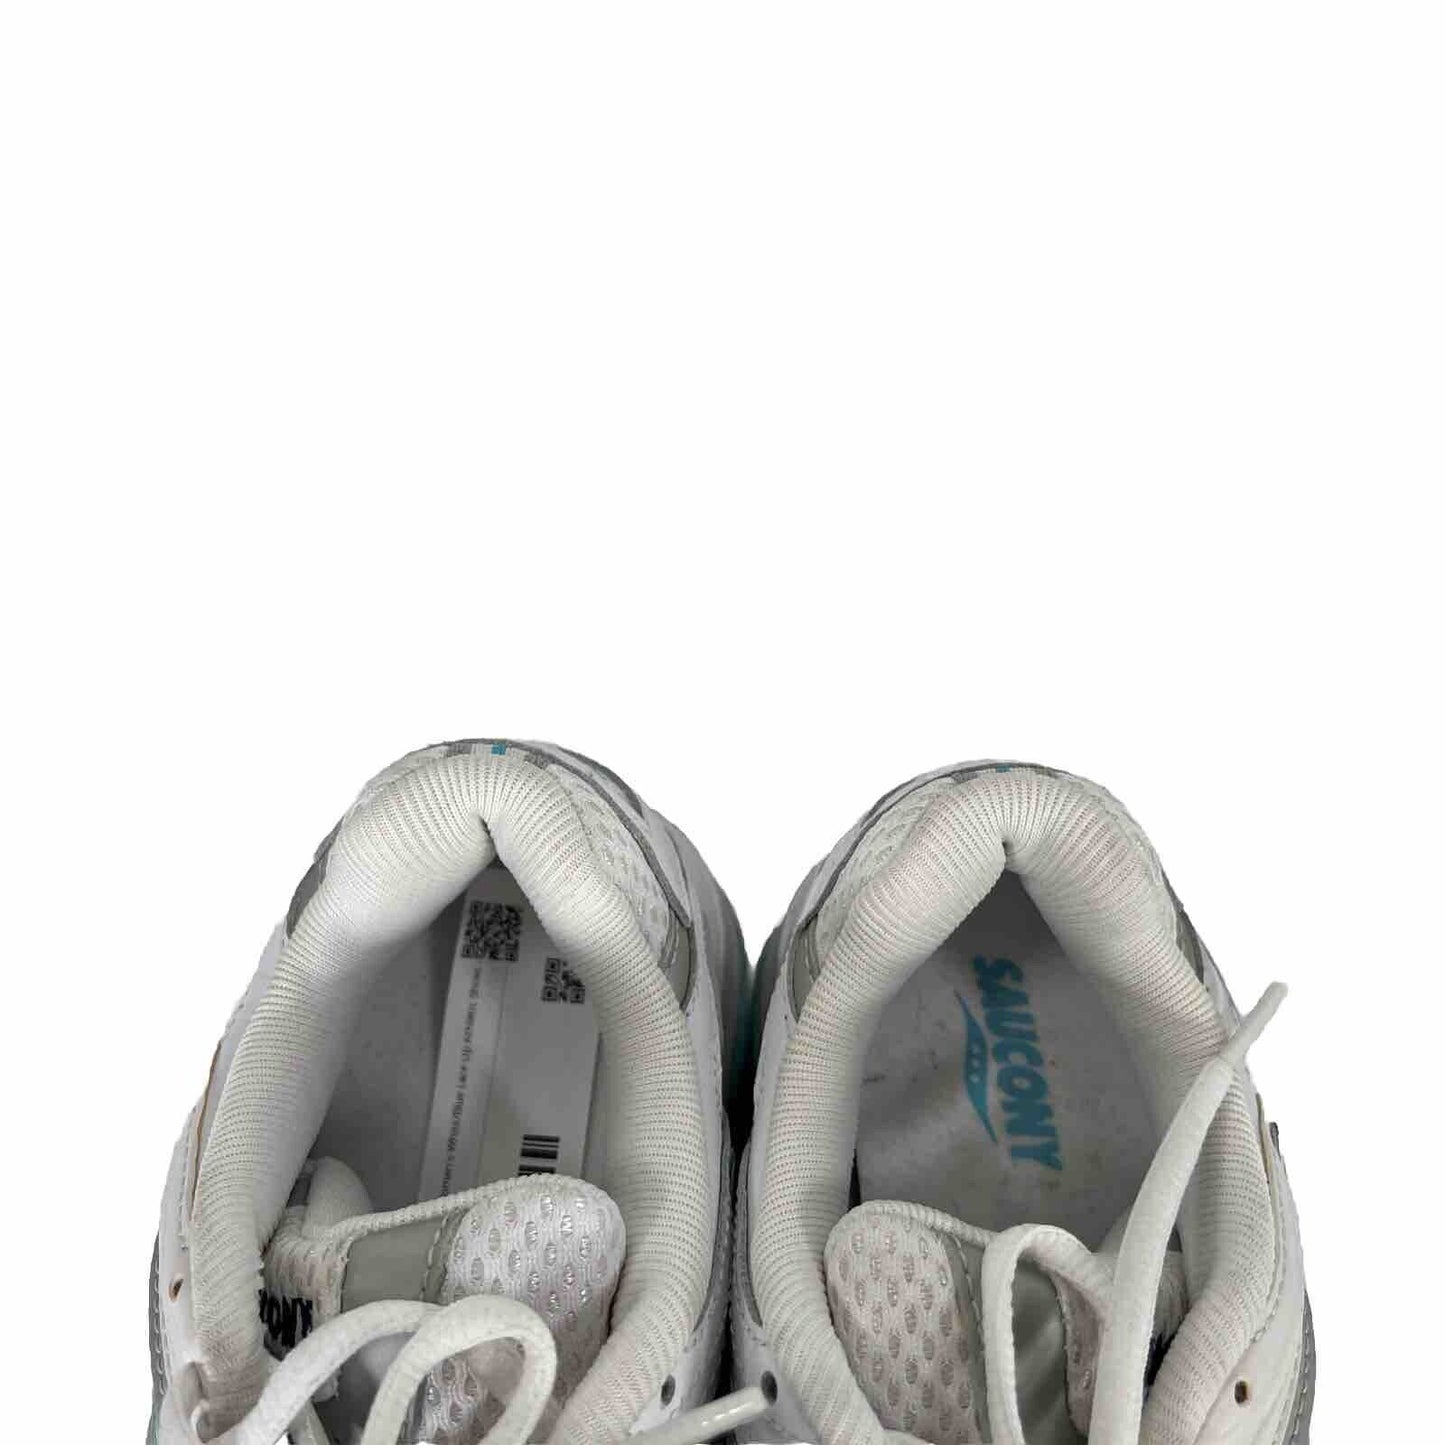 Saucony Women's White/Blue Lace Up Athletic Shoes - 6.5